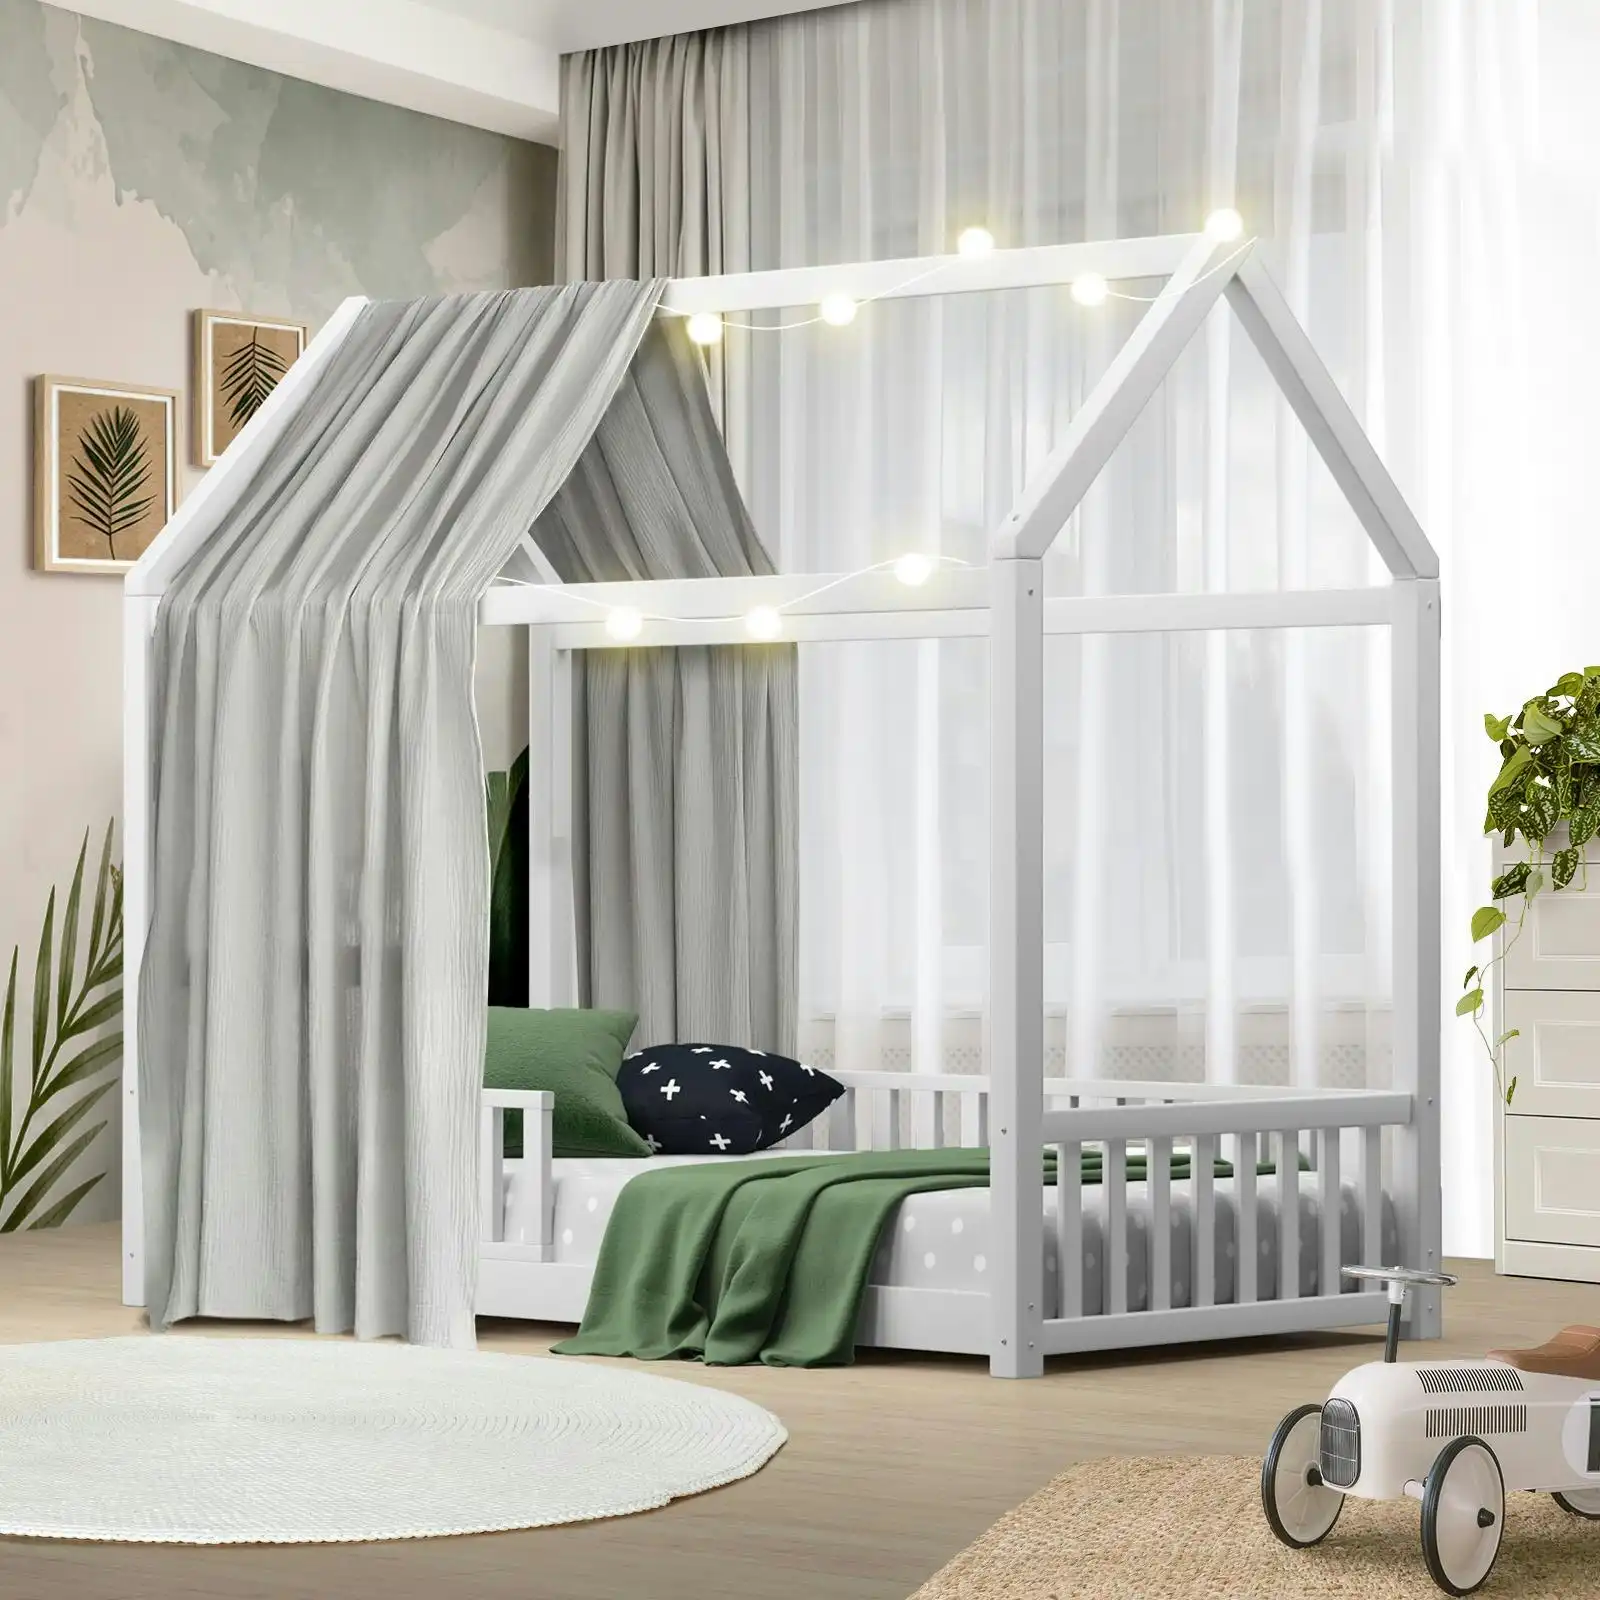 Oikiture Bed Frame Kids Wooden Single Timber House Frame Mattress Base Platform